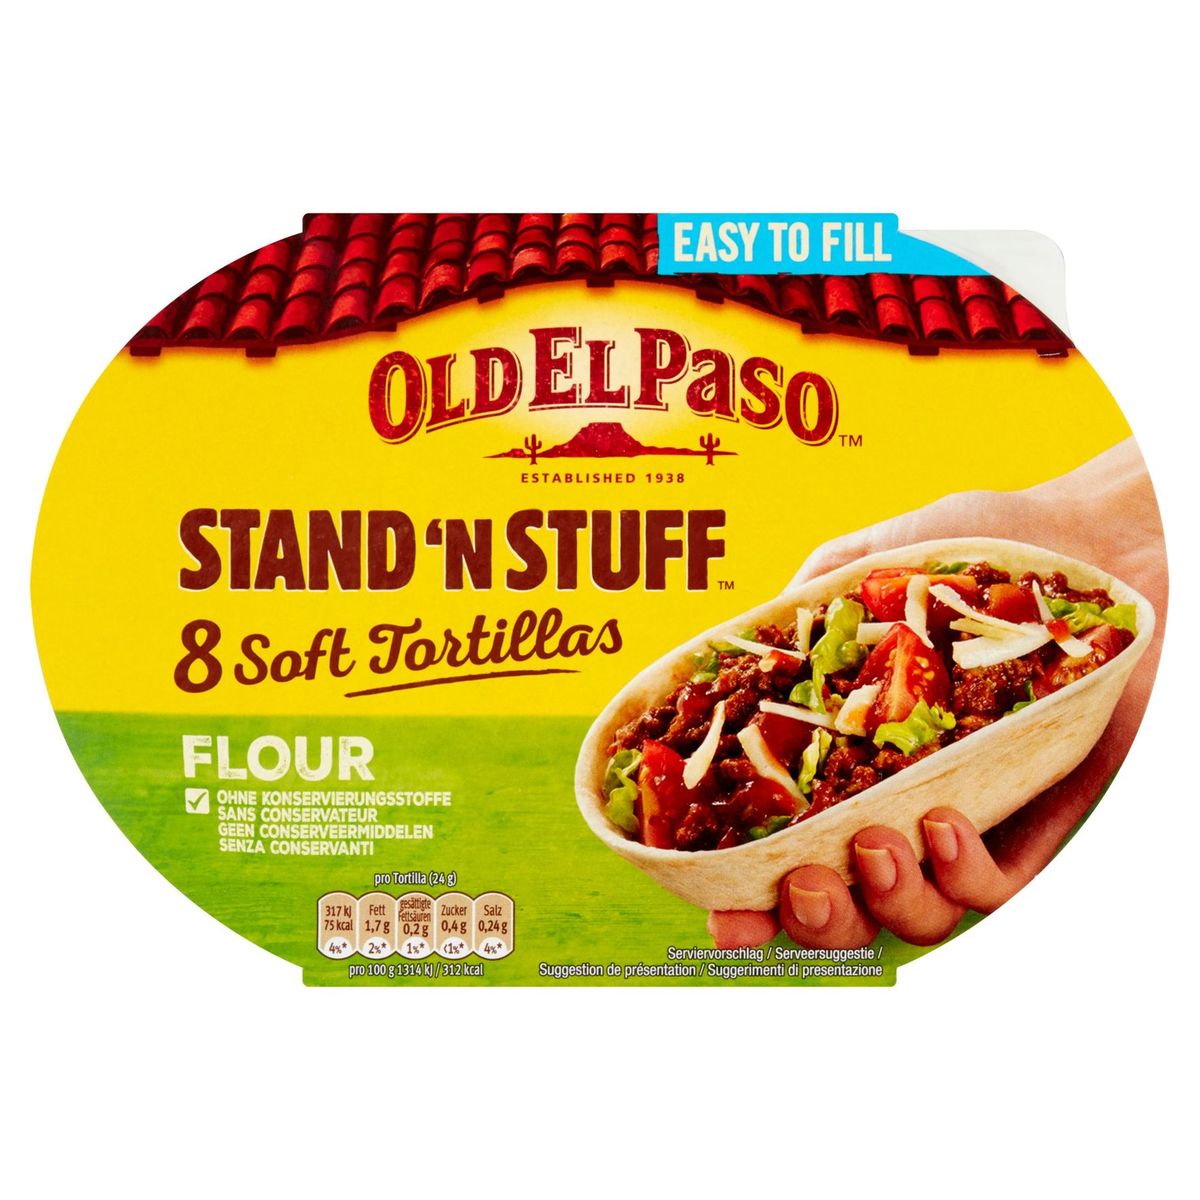 Old El Paso Stand'n Stuff 8 Soft Tortillas Flour 193 g